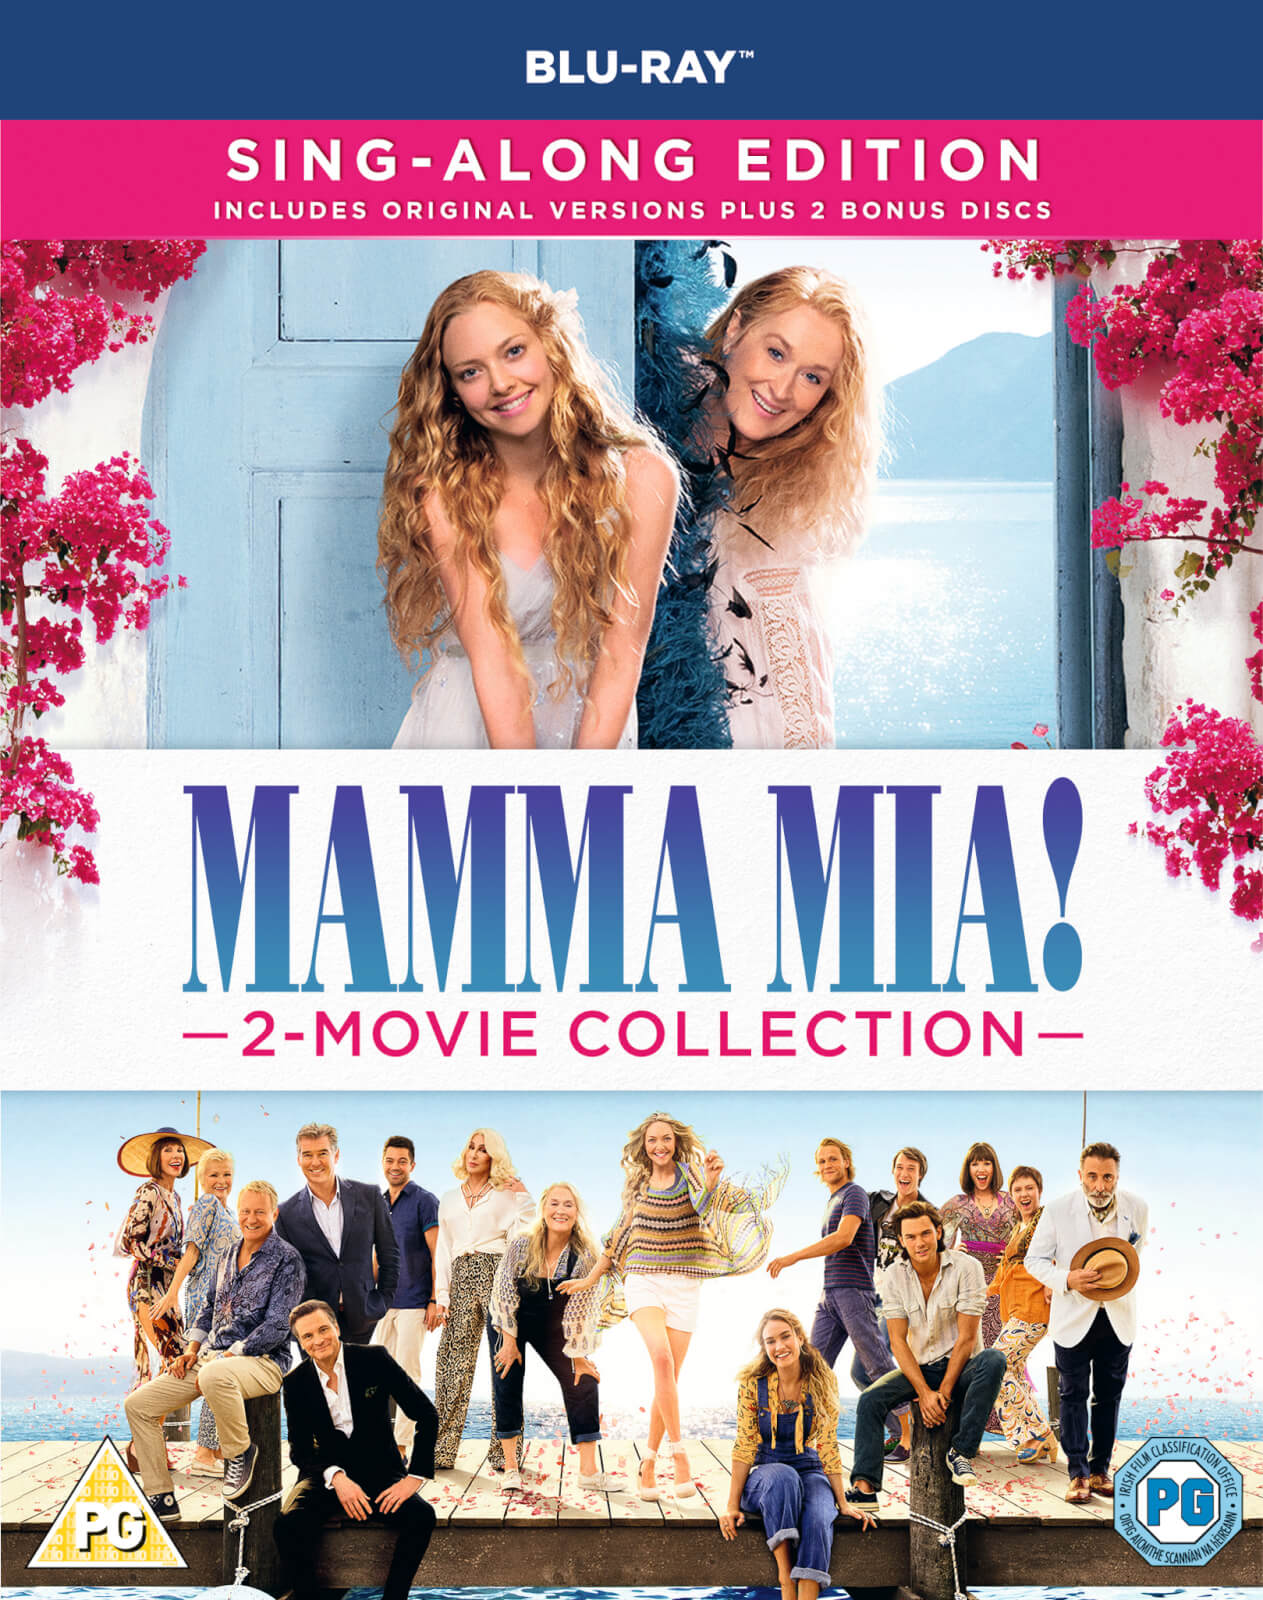 mamma mia! 2-movie collection  sing-along edition (blu-ray + 2 bonus discs)